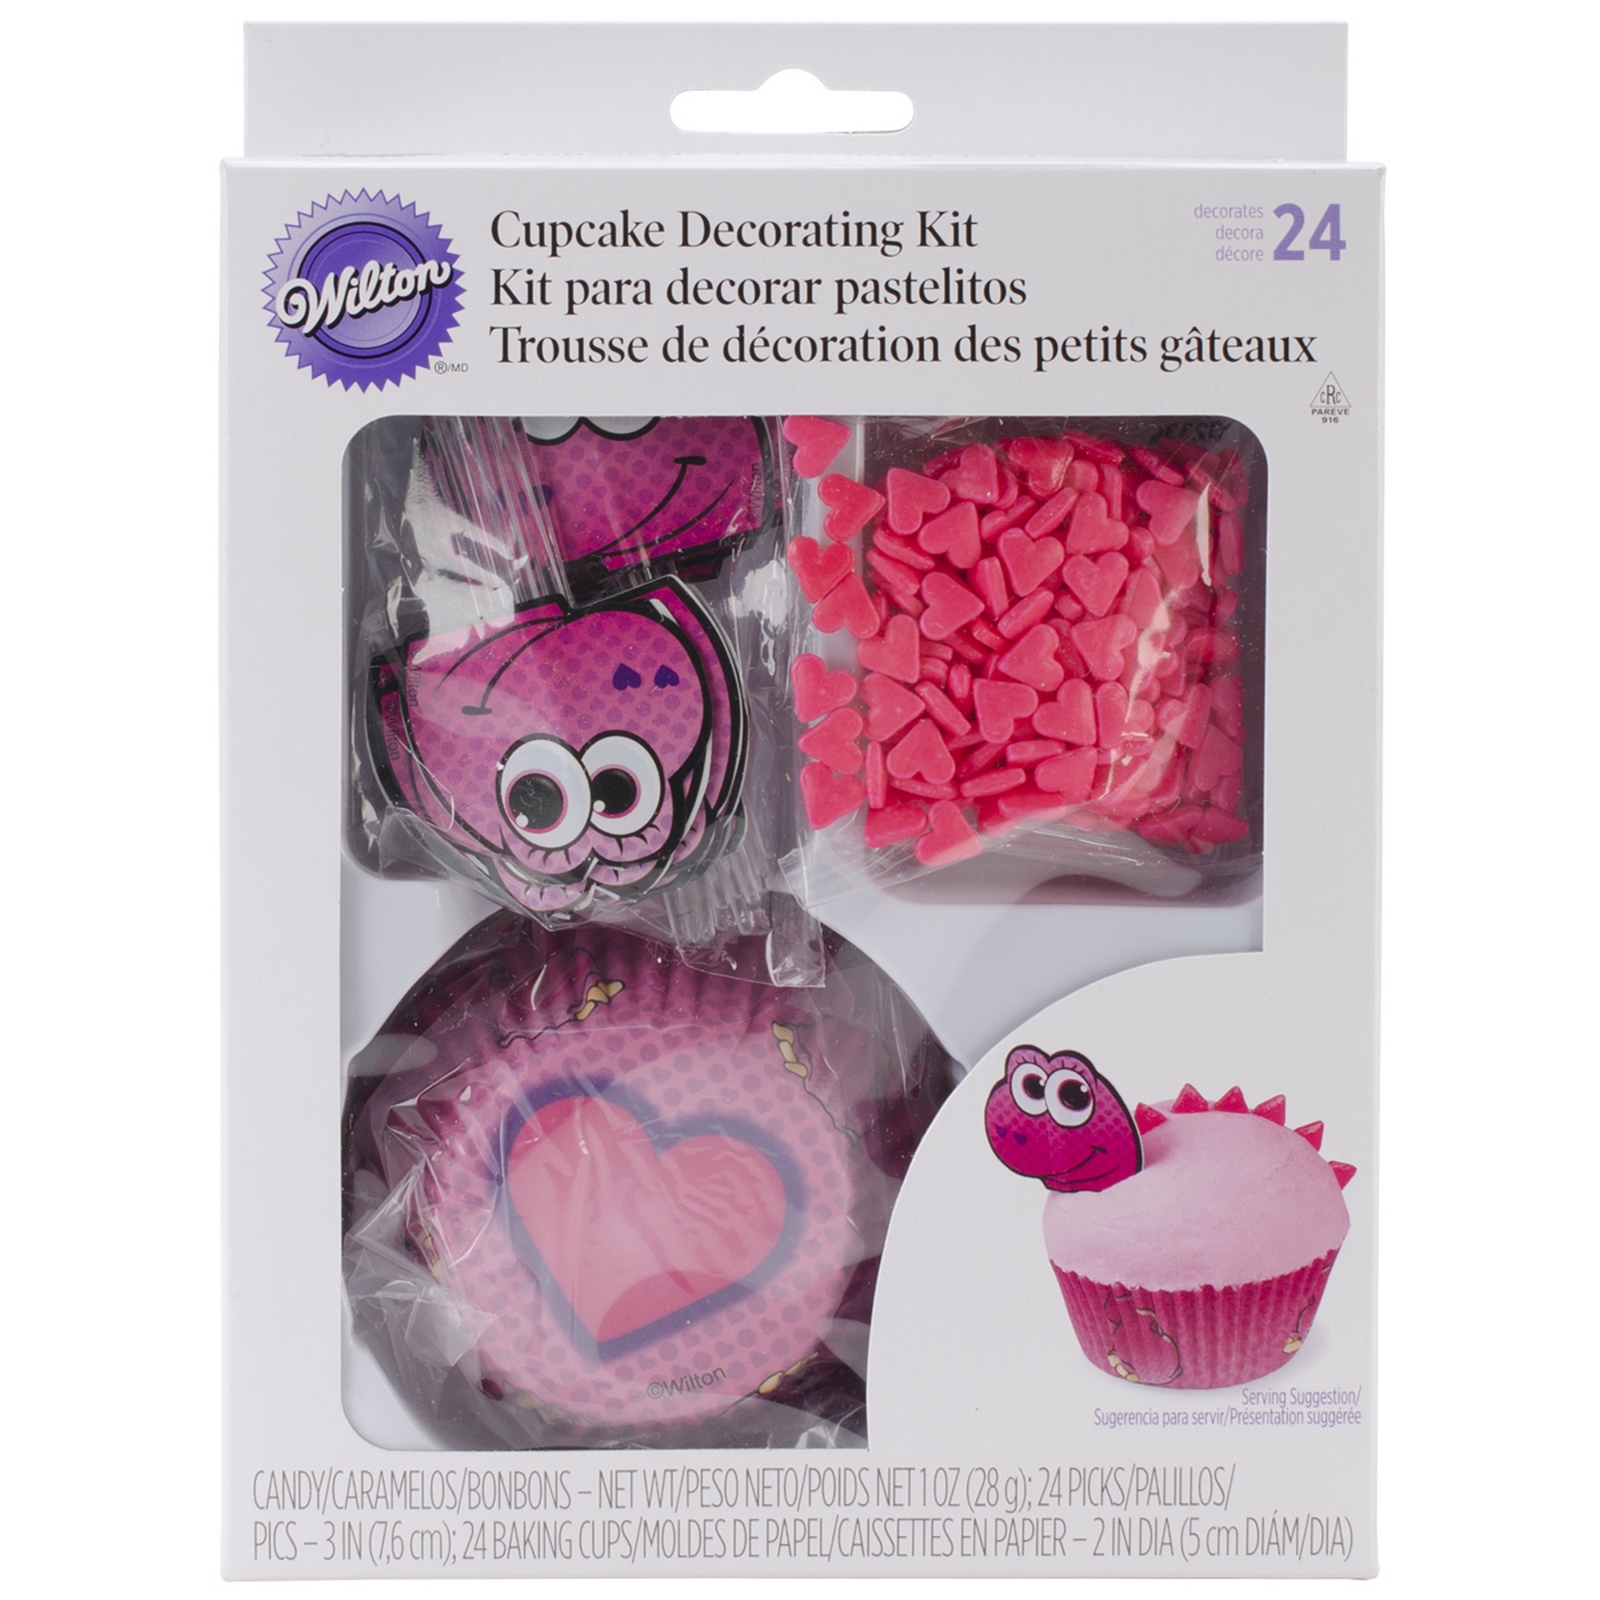 2000541 Wilton Cupcake Decorating Kit Valentine